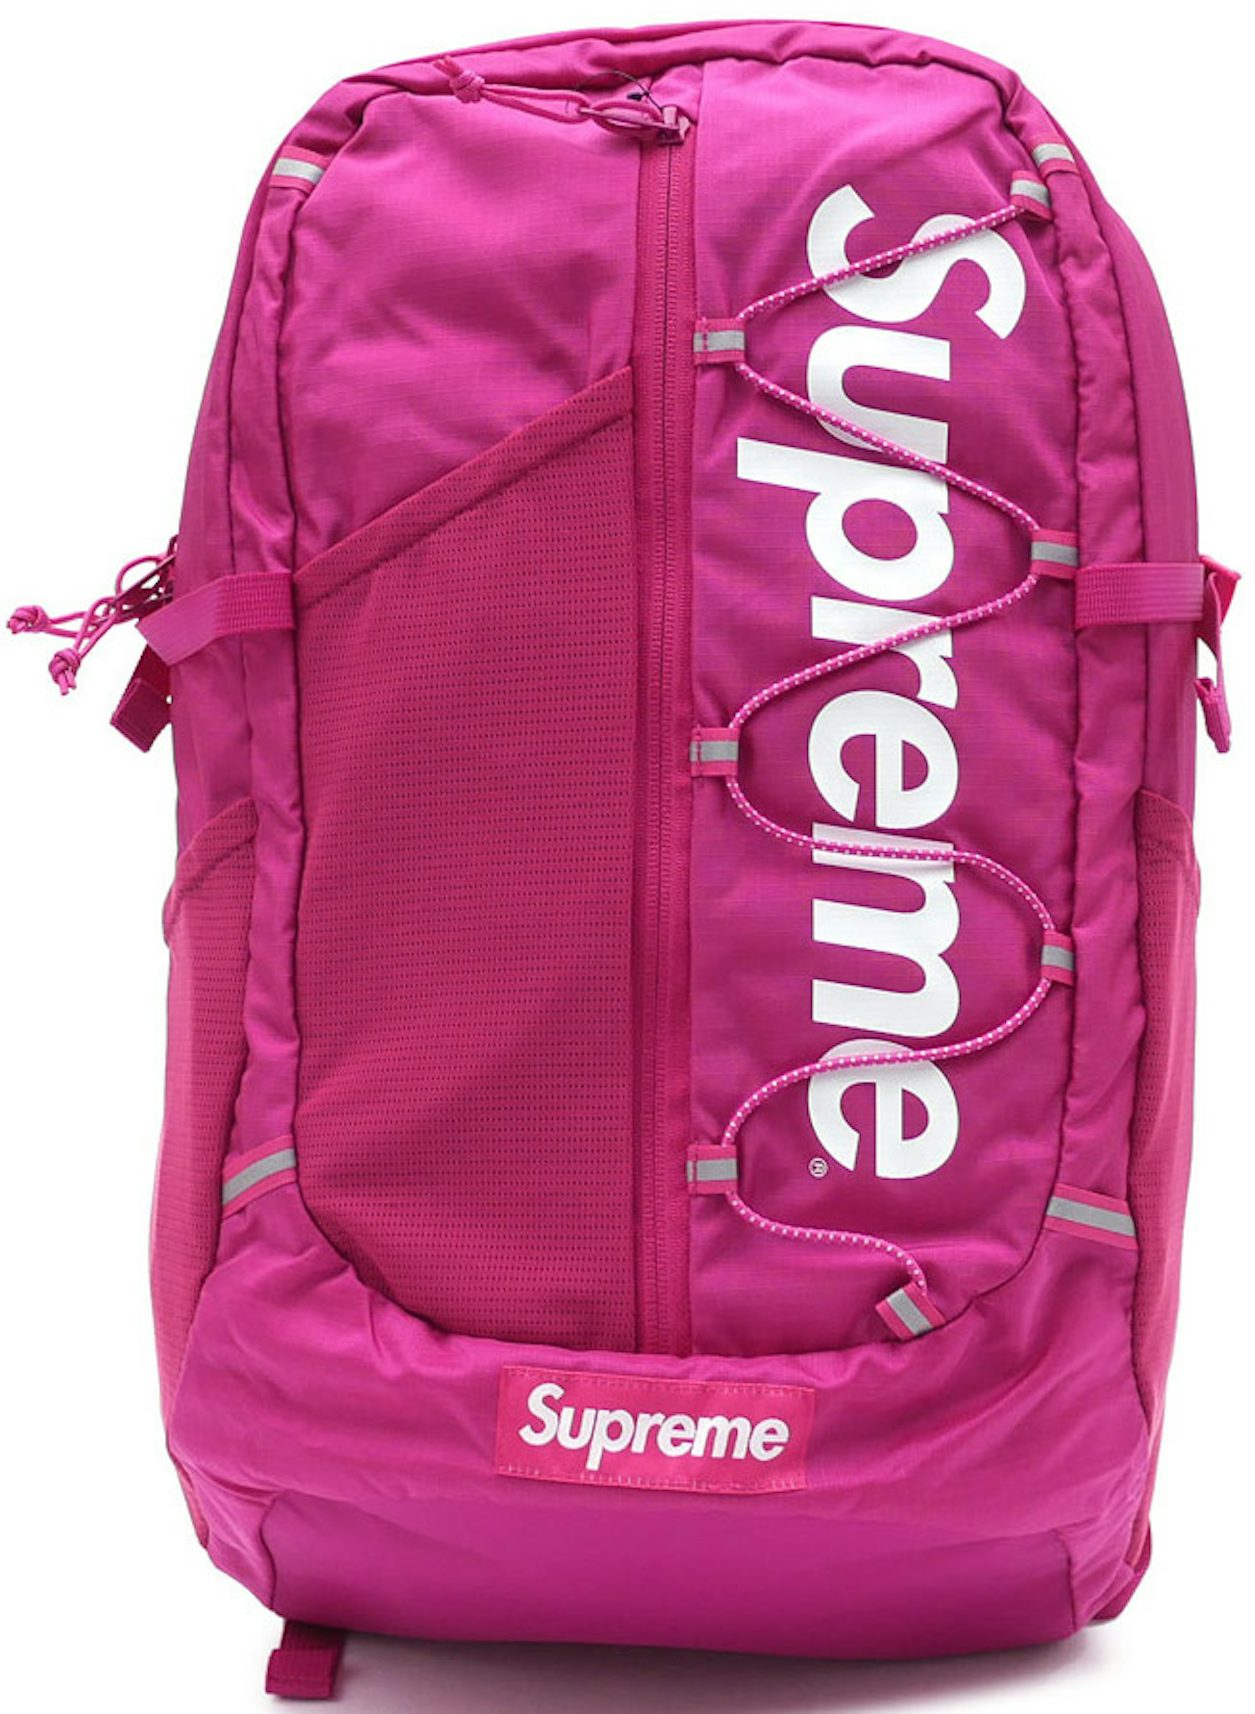 Supreme SS17 Backpack Black Used